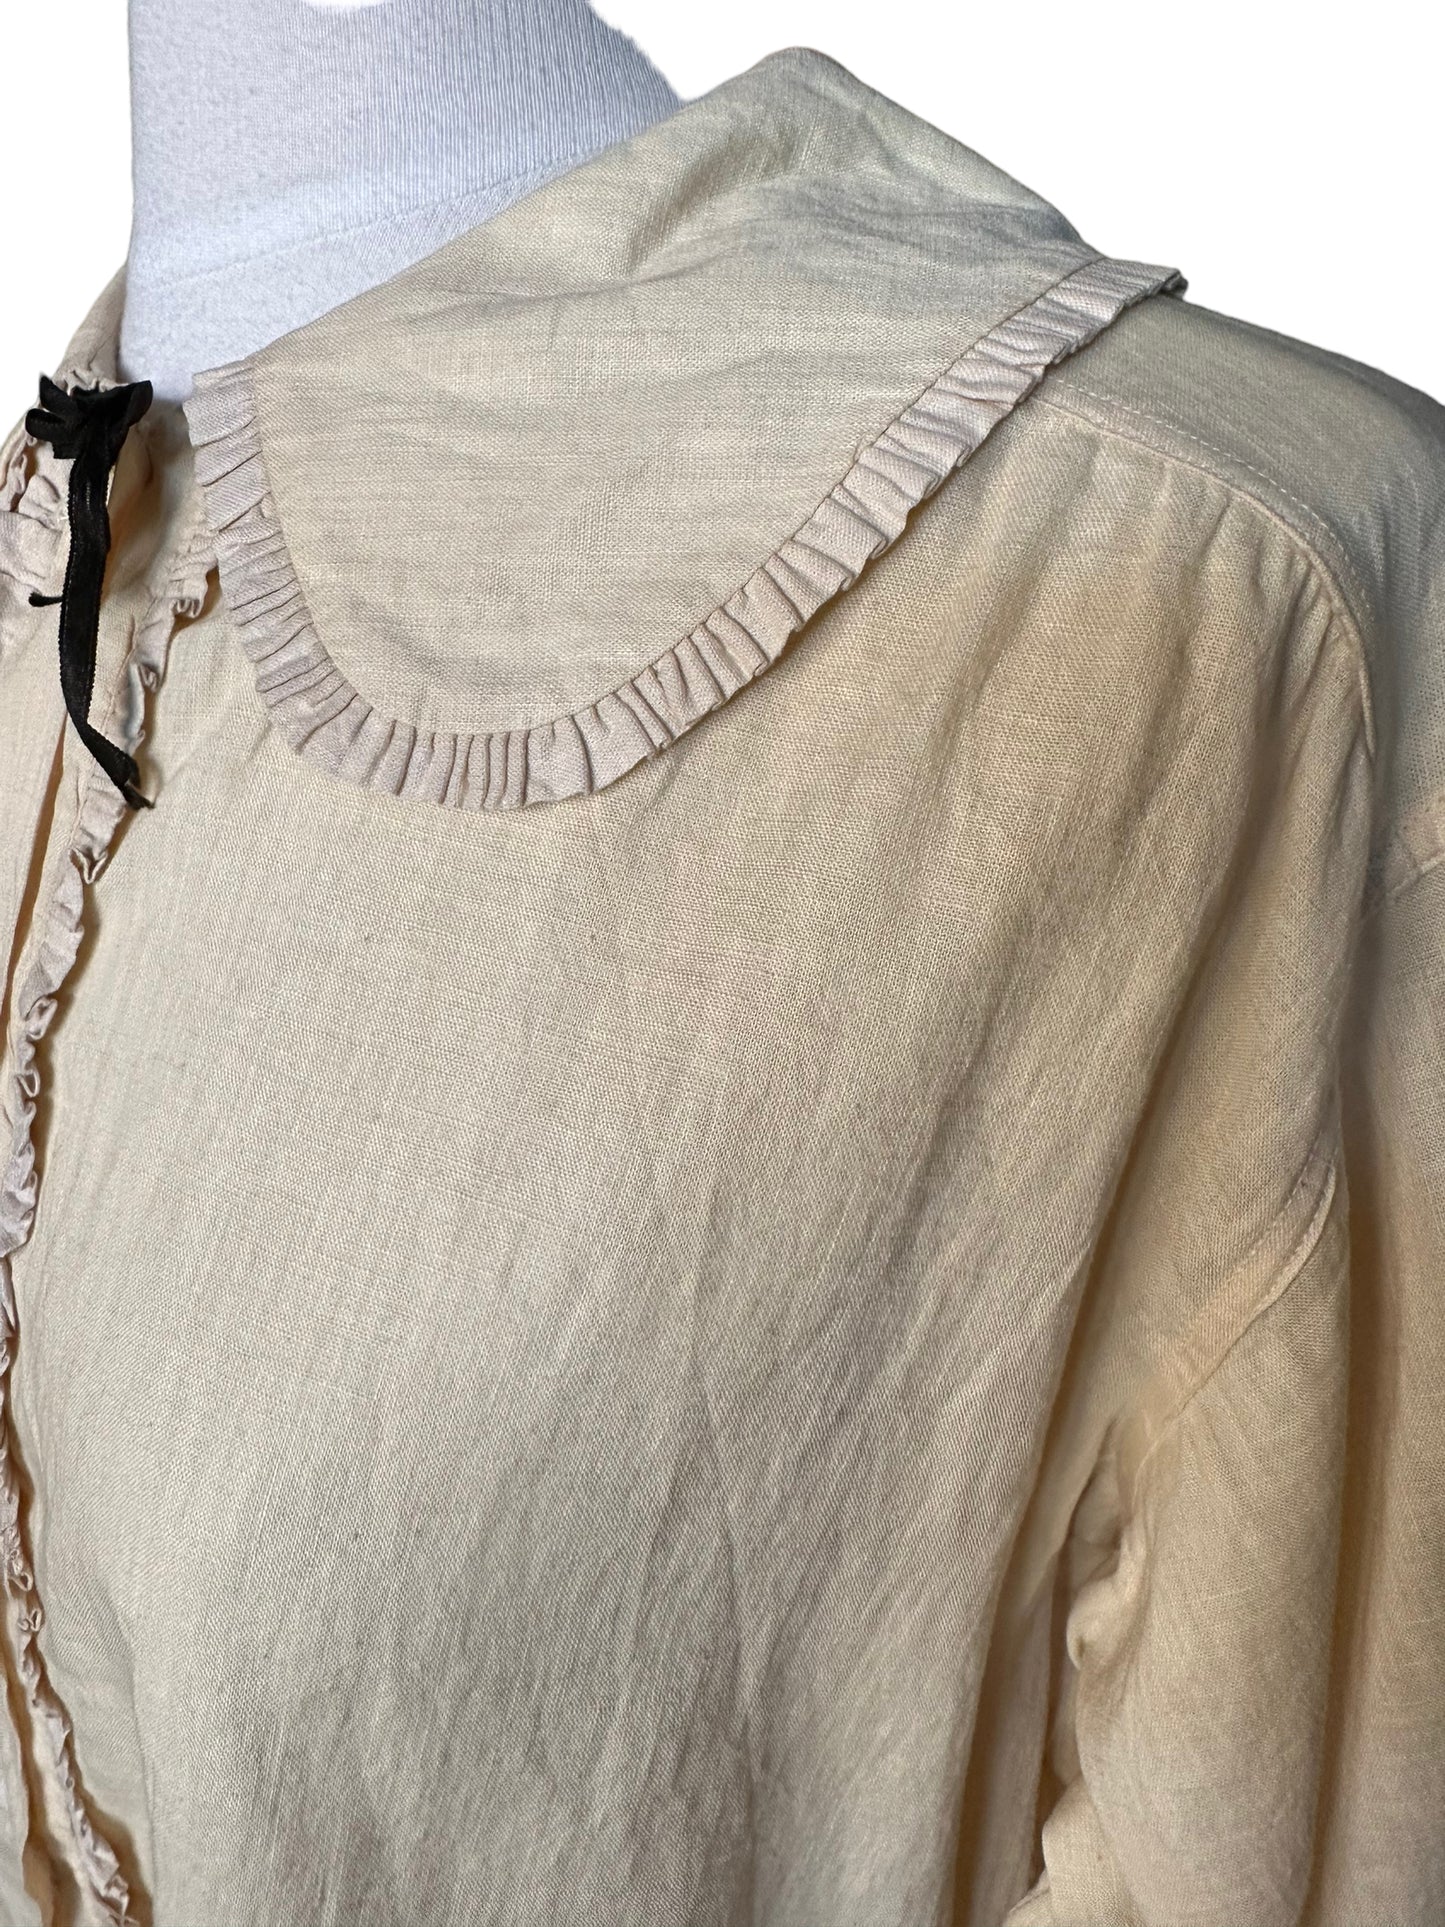 Left shoulder view of Early 1900s Antique Linen Blouse | Seattle Antique Clothing | Barn Owl True Vintage